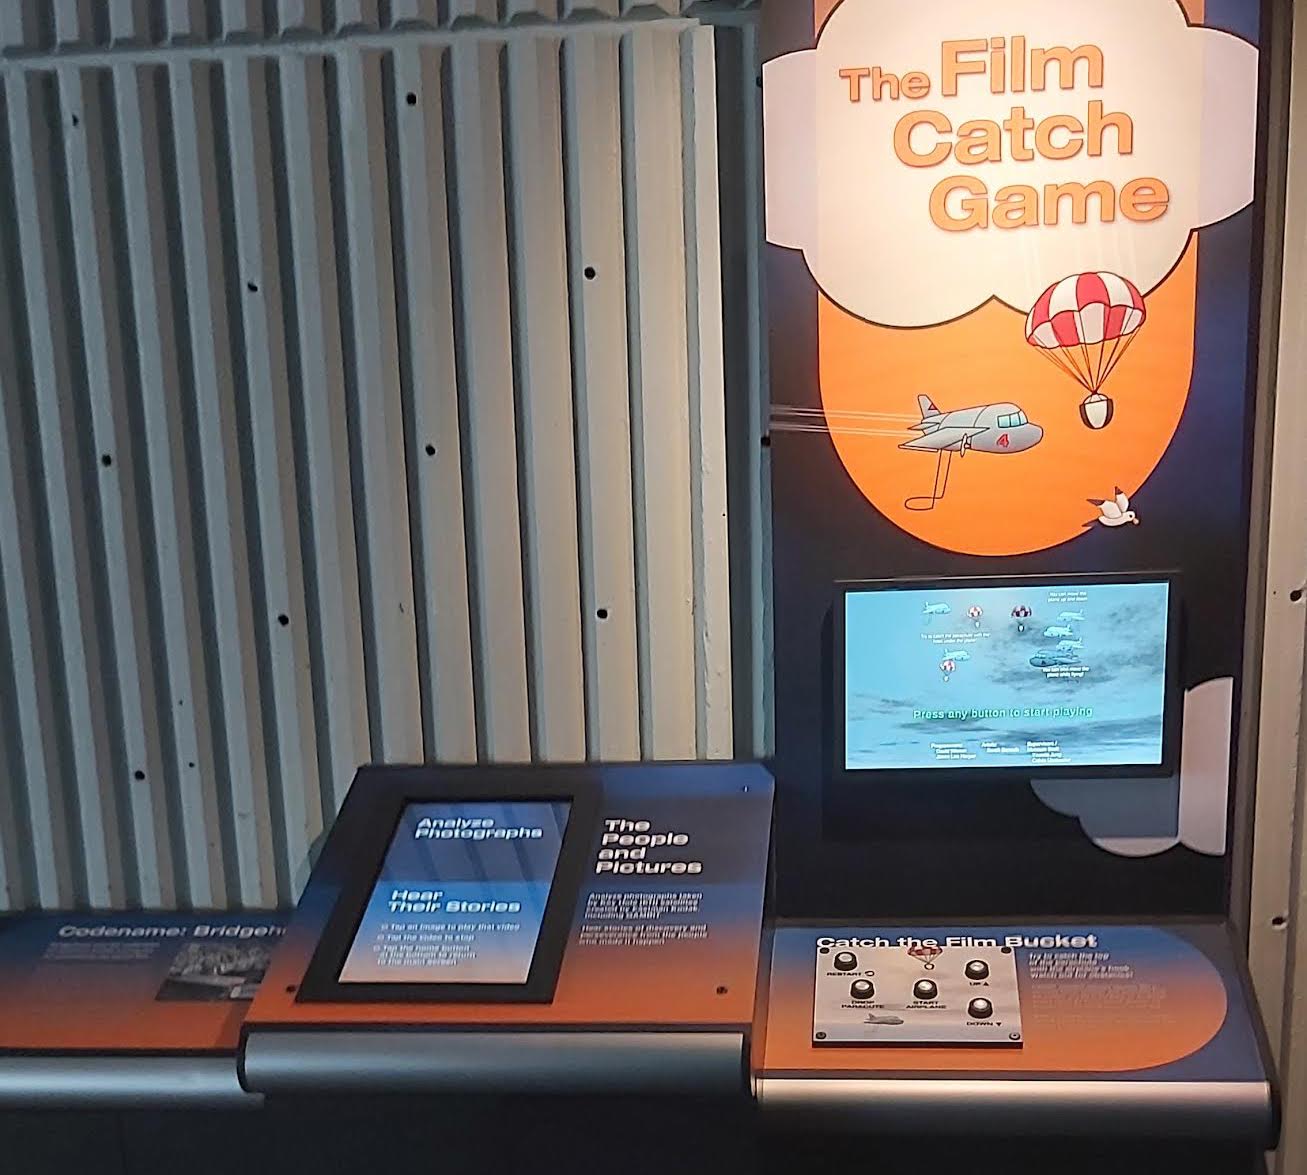 Picture of the Gambit Exhibit Film Catch Game at the Strasenburgh Planetarium